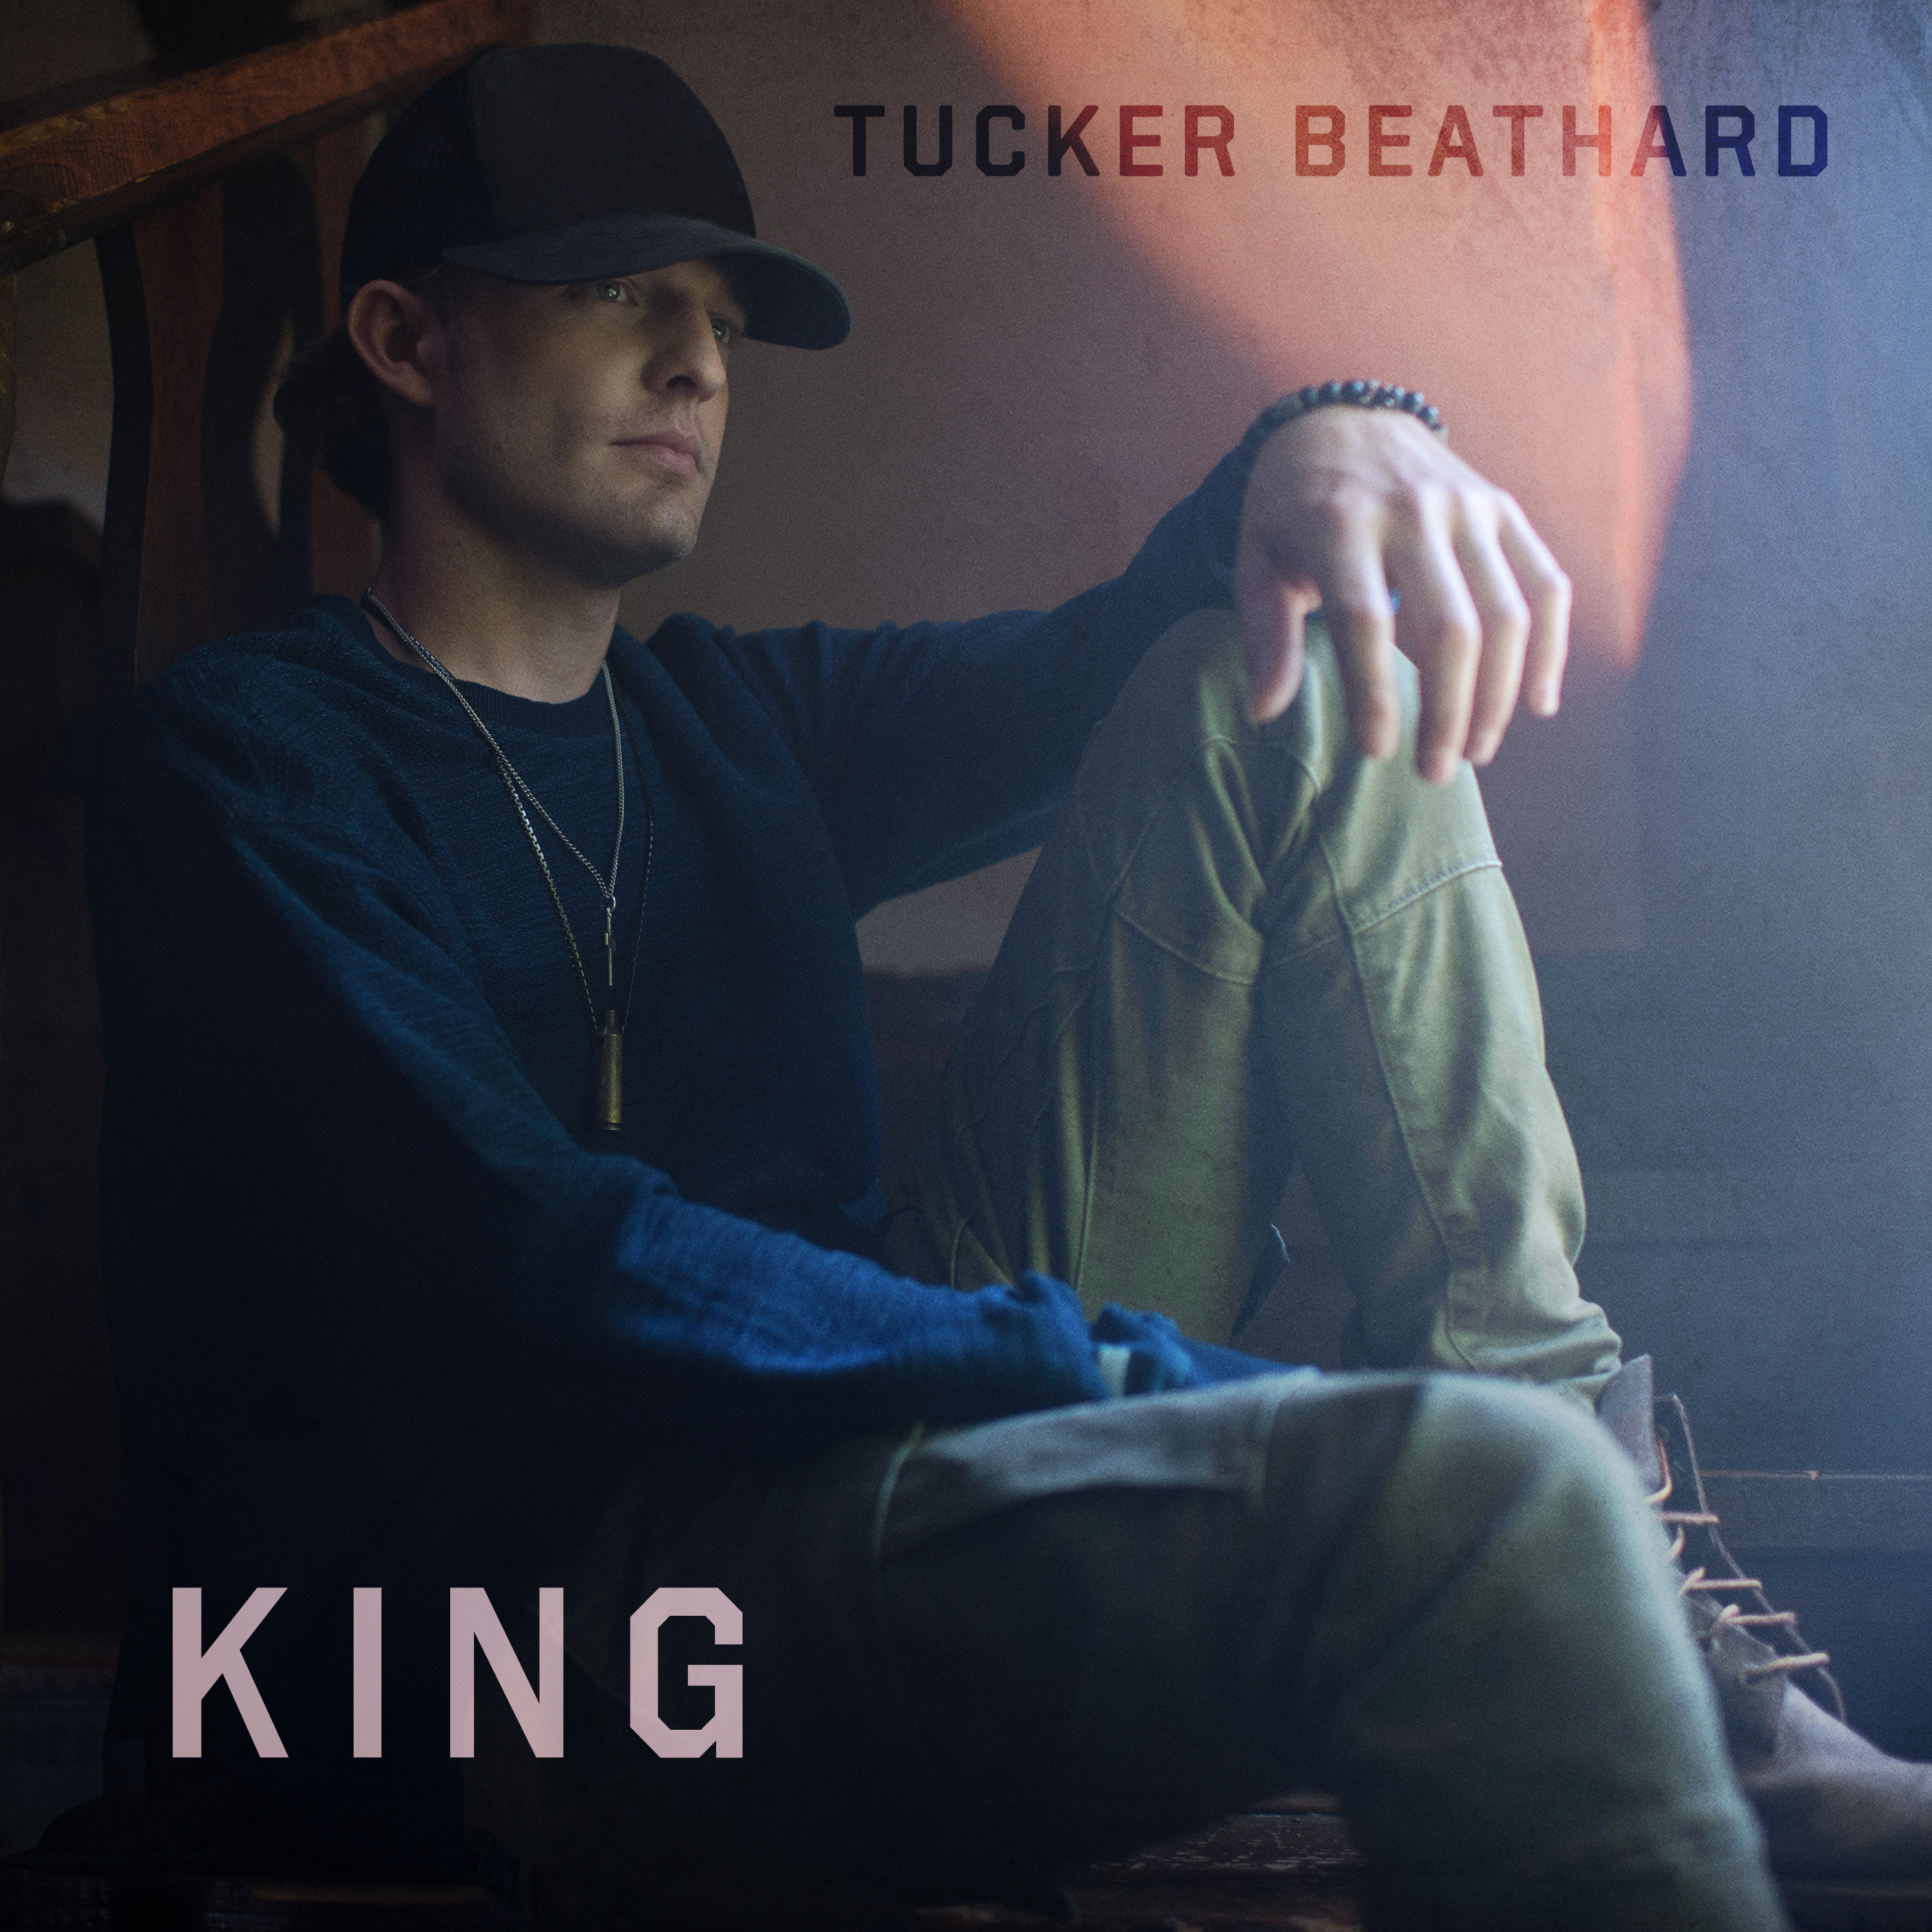 TUCKER BEATHARD'S NEW ALBUM "KING" AVAILABLE TODAY